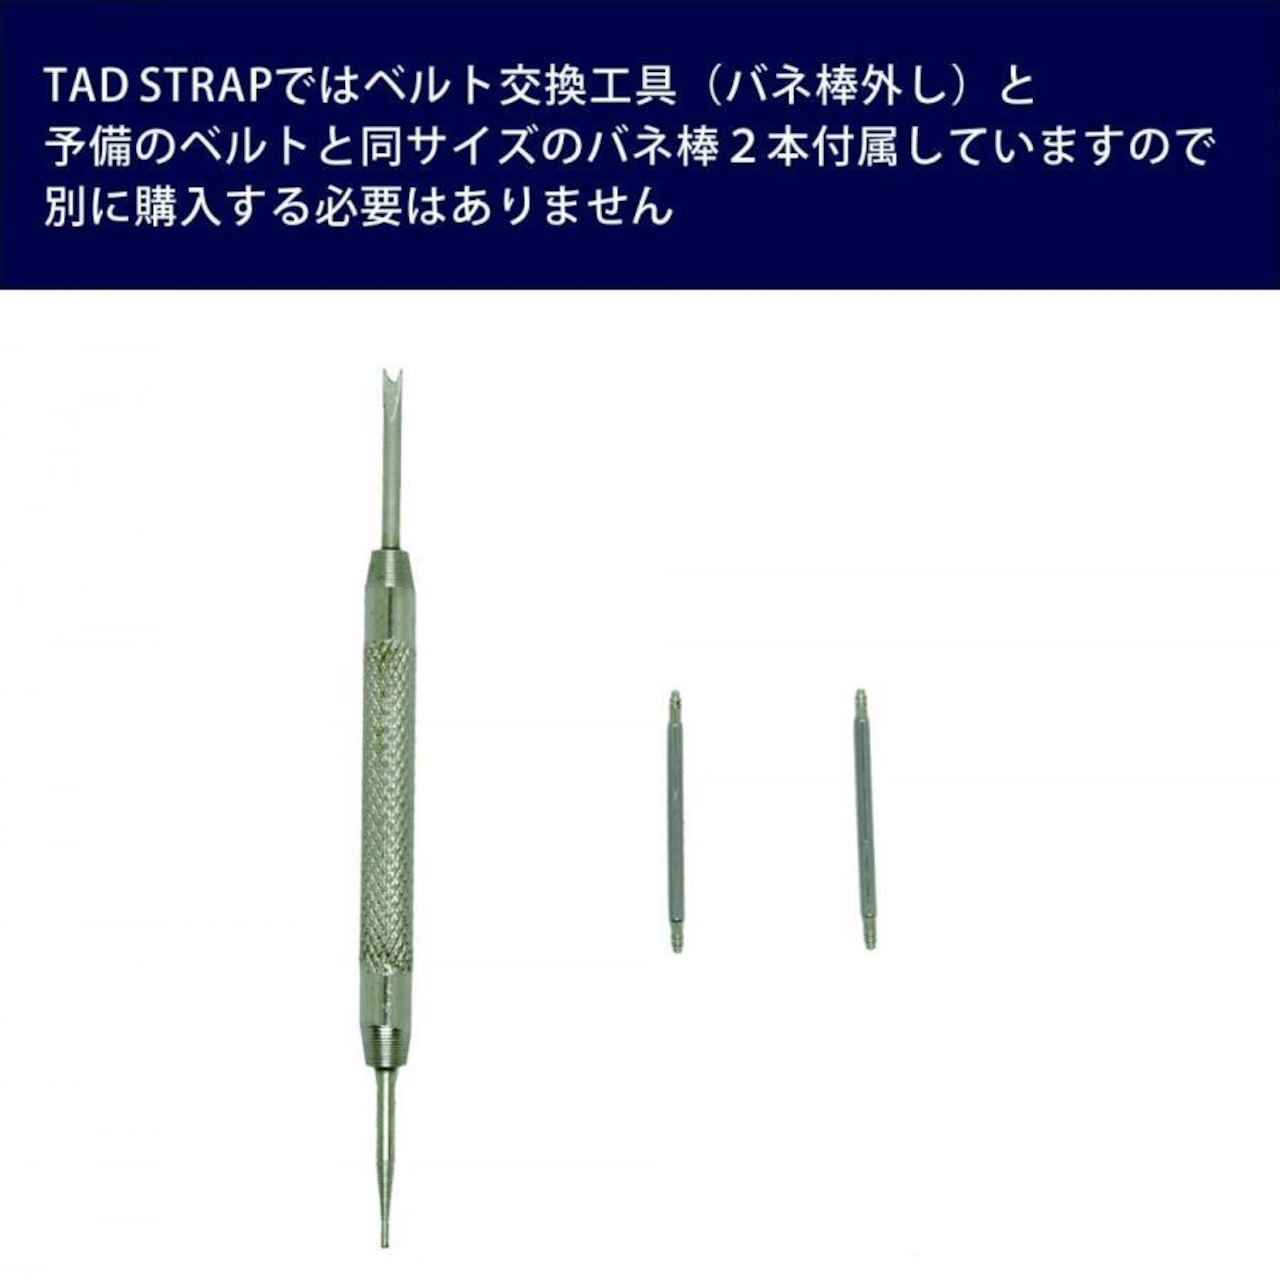 TAD STRAP nagara3 NATOストラップ  20mm 腕時計ベルト